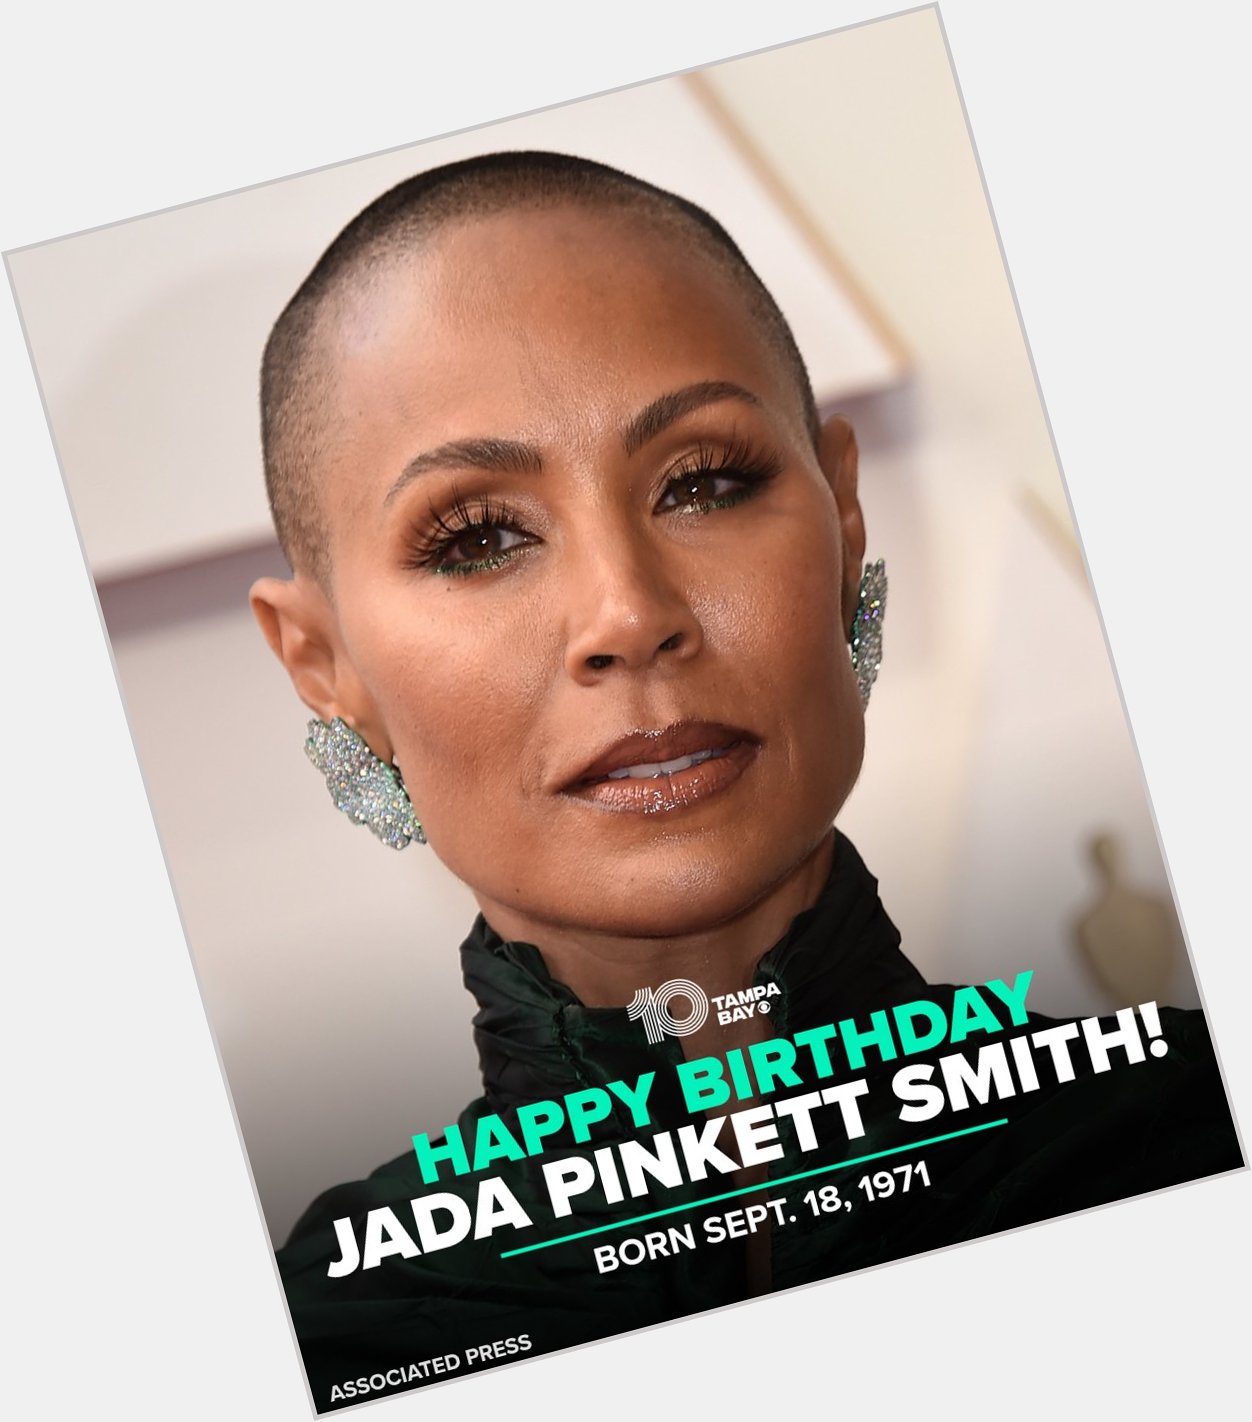 HAPPY BIRTHDAY American actress and talk show host Jada Pinkett Smith is celebrating her 51st birthday today! 